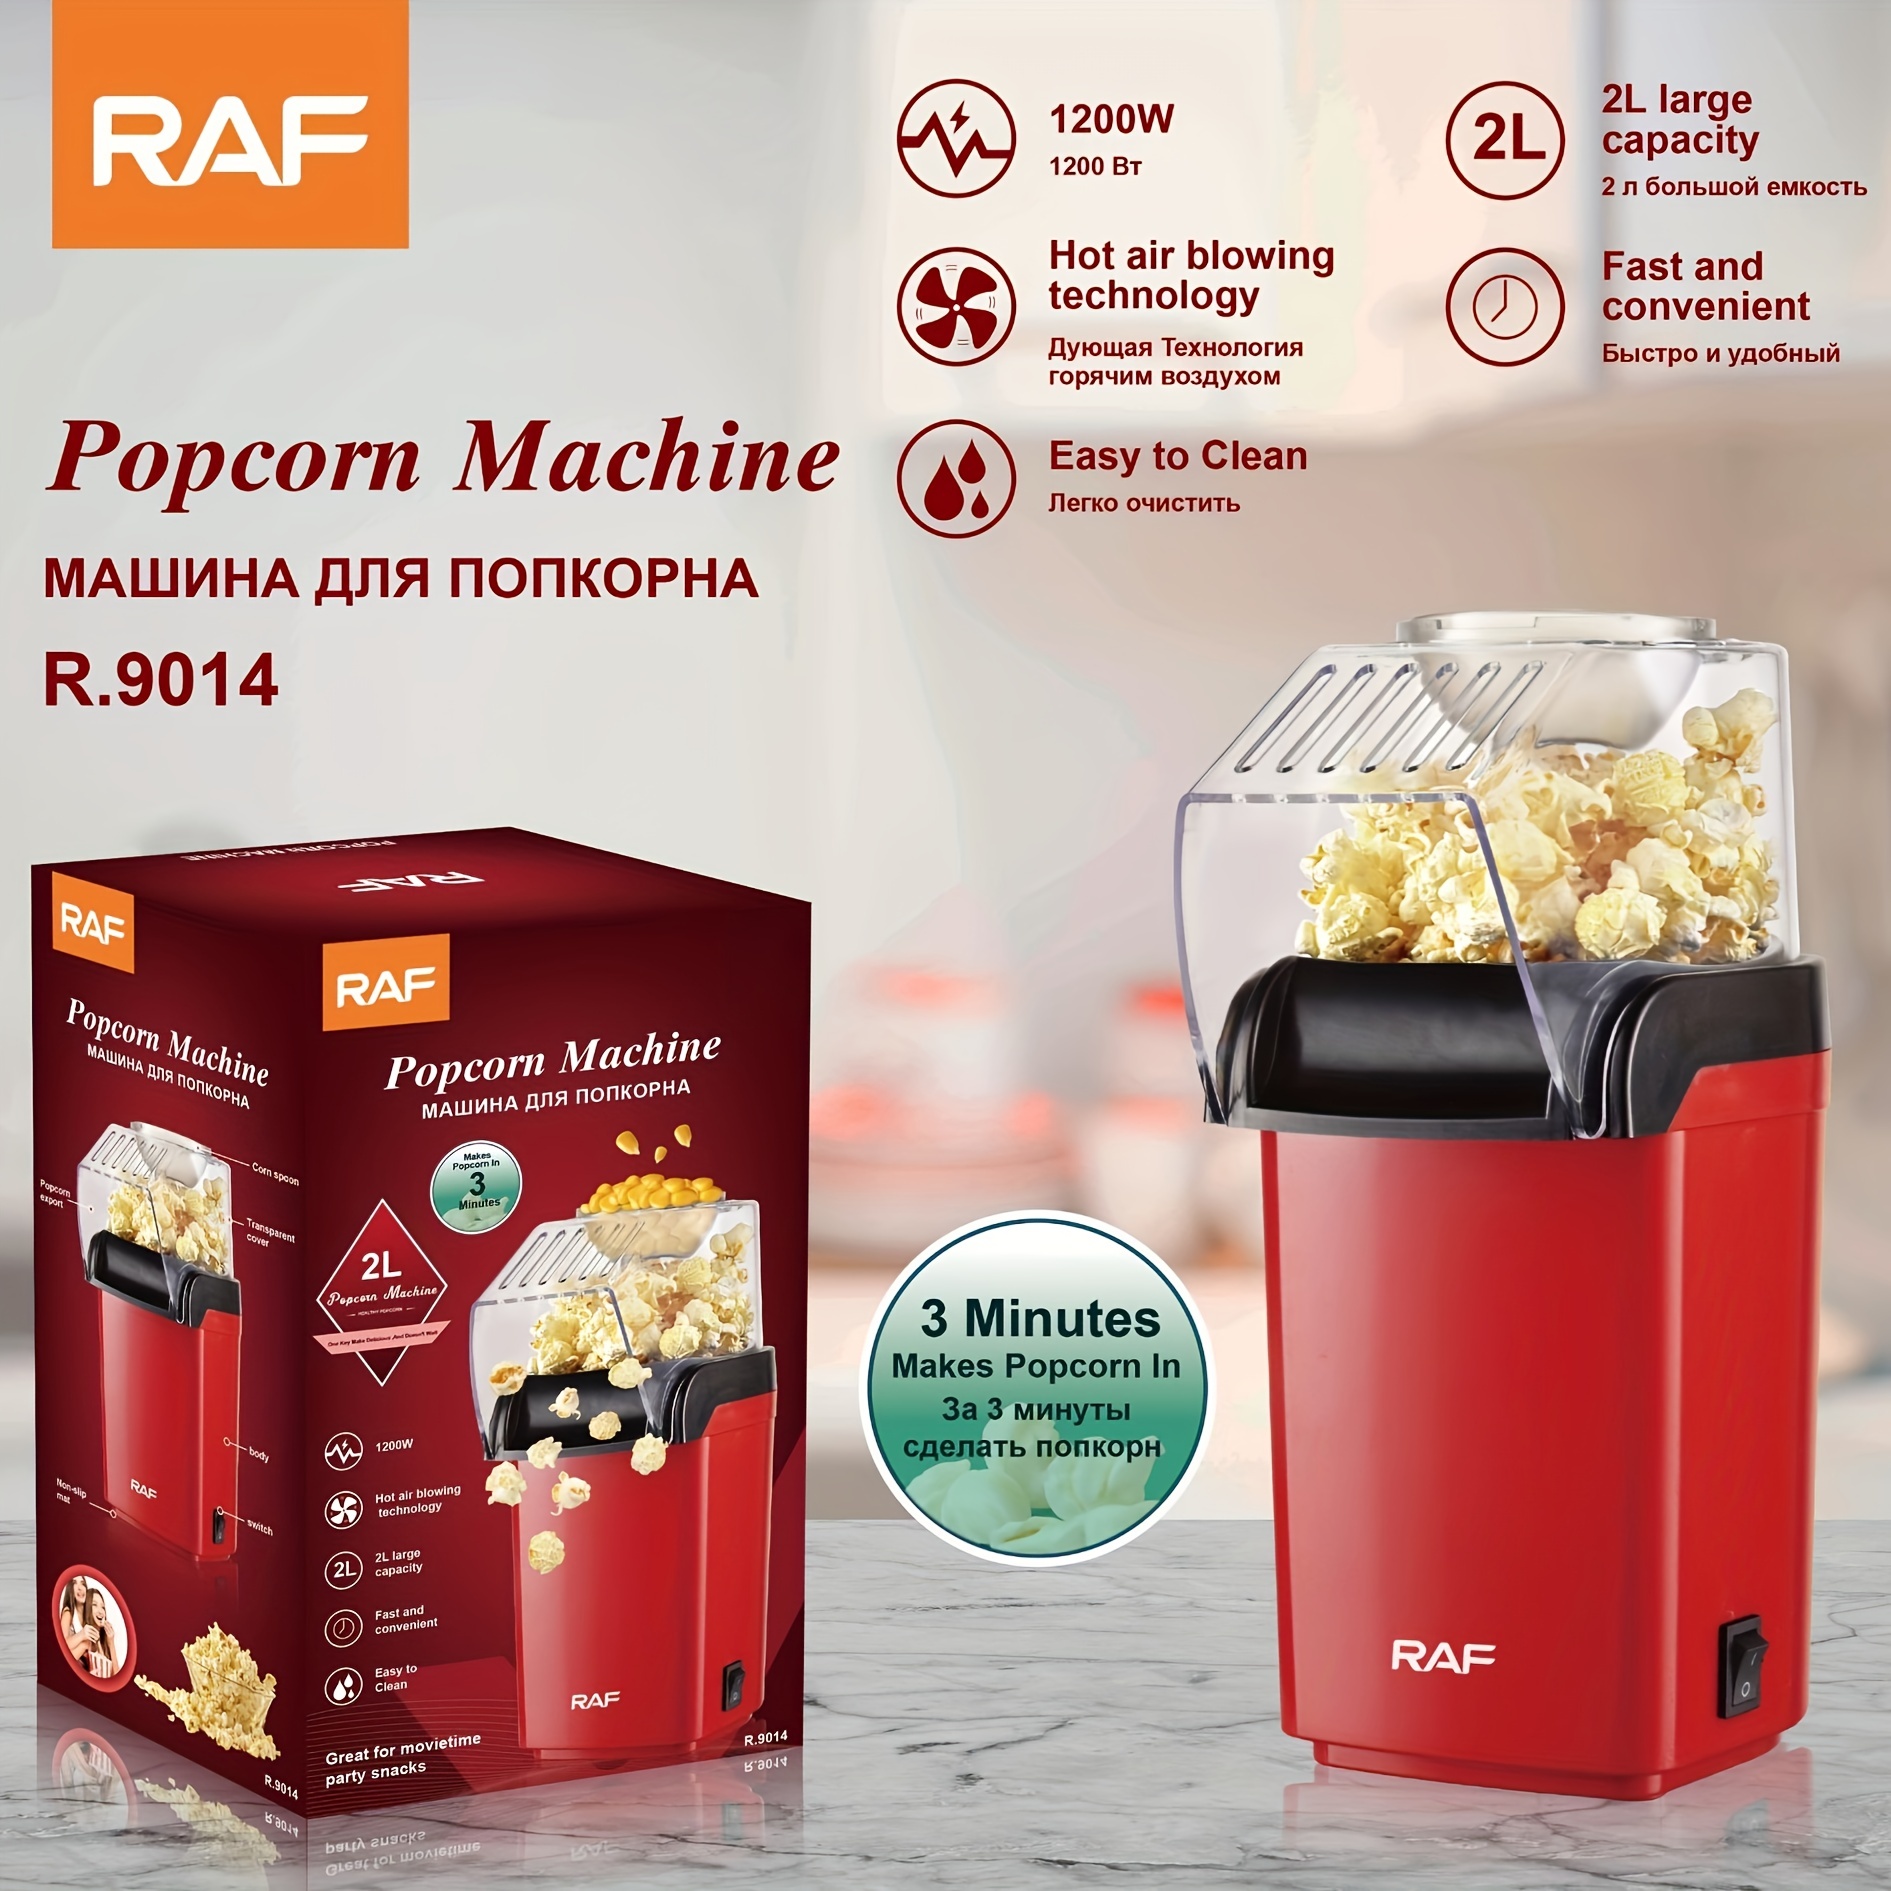 Mini Popcorn Maker Hand-cranked Cannon Corn Popper Pop Corn Puffing Machine  Sale